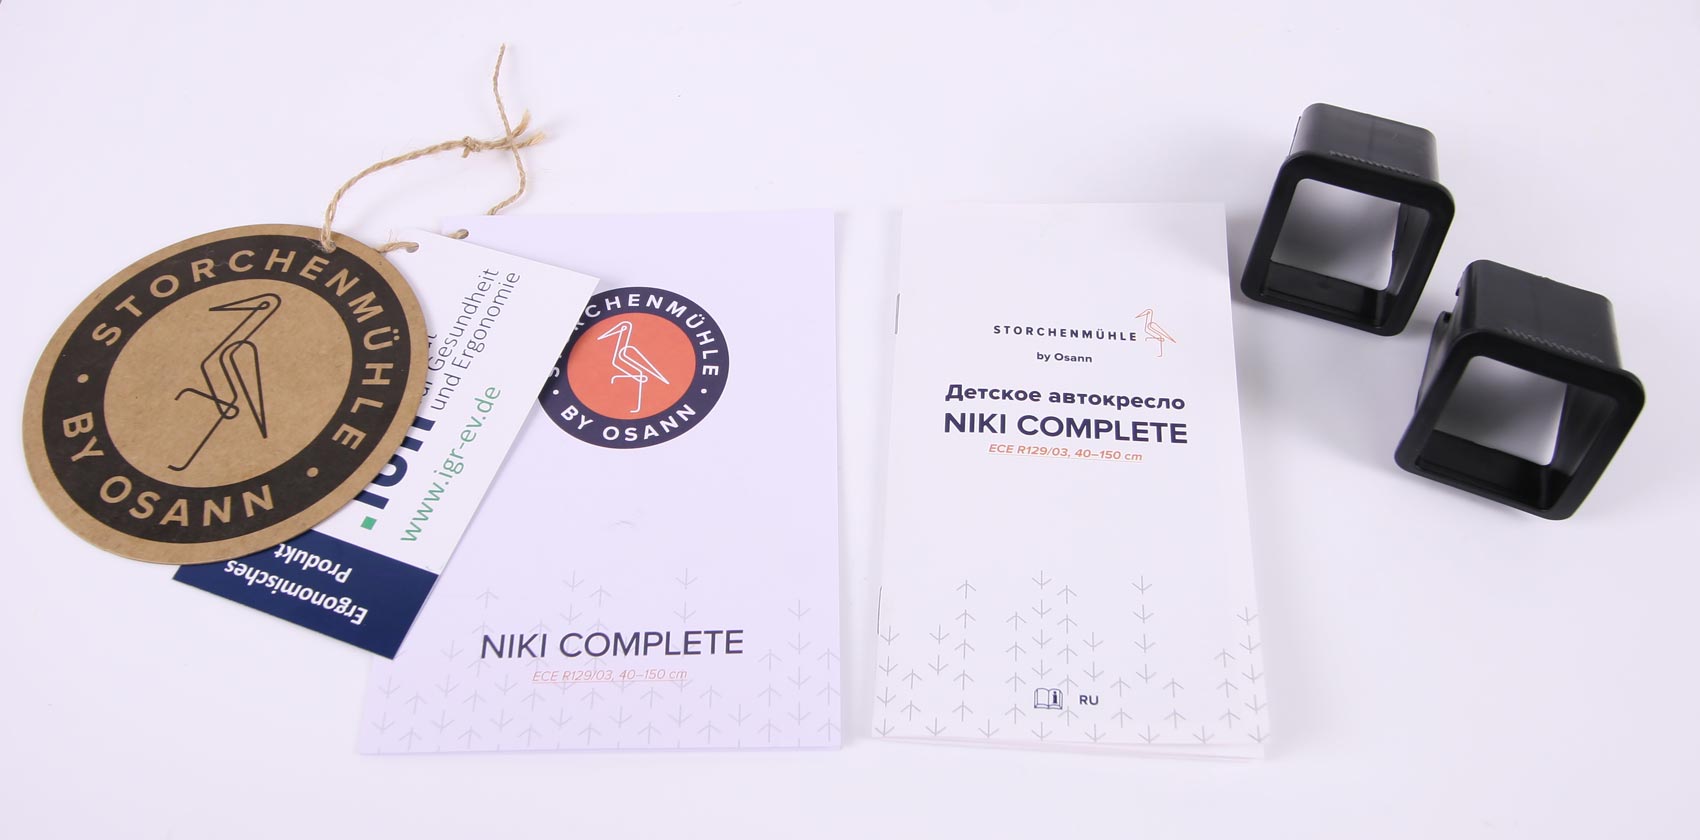 Osann Storchenmuhle Niki Complete инструкции